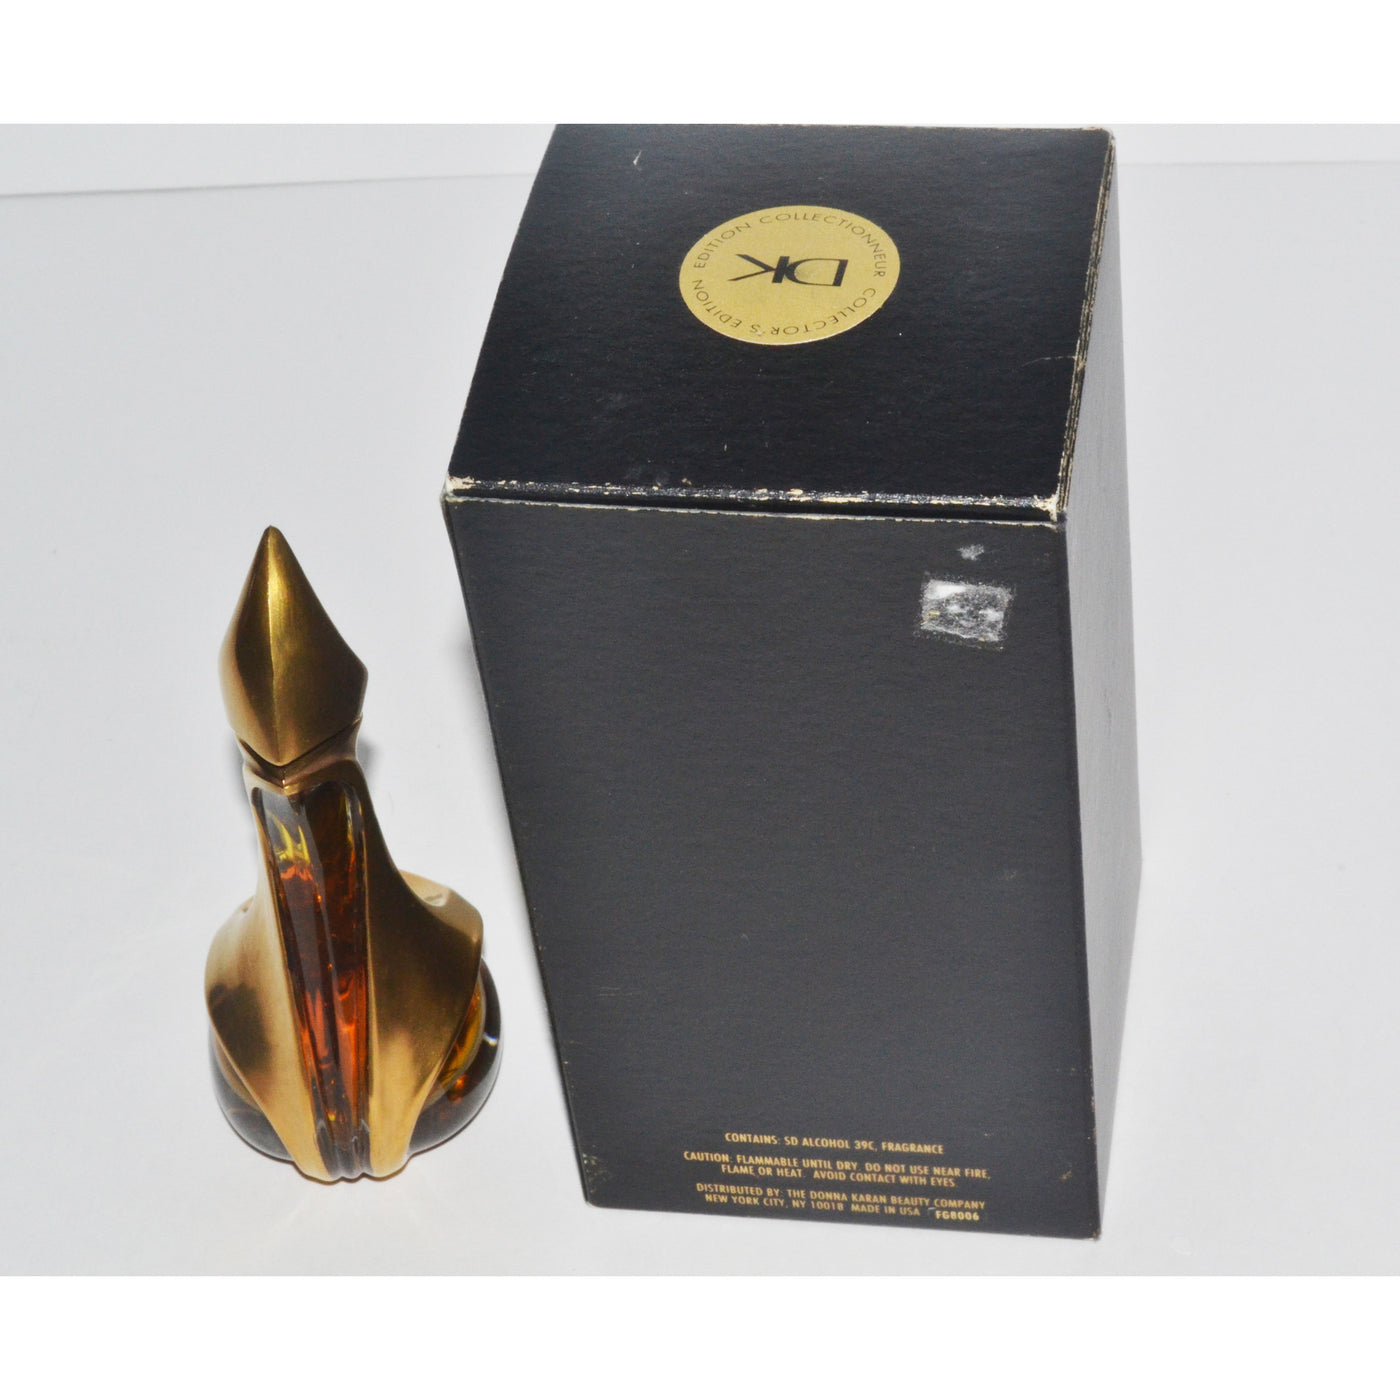 Vintage Donna Karan Parfum Collector’s Edition Bottle